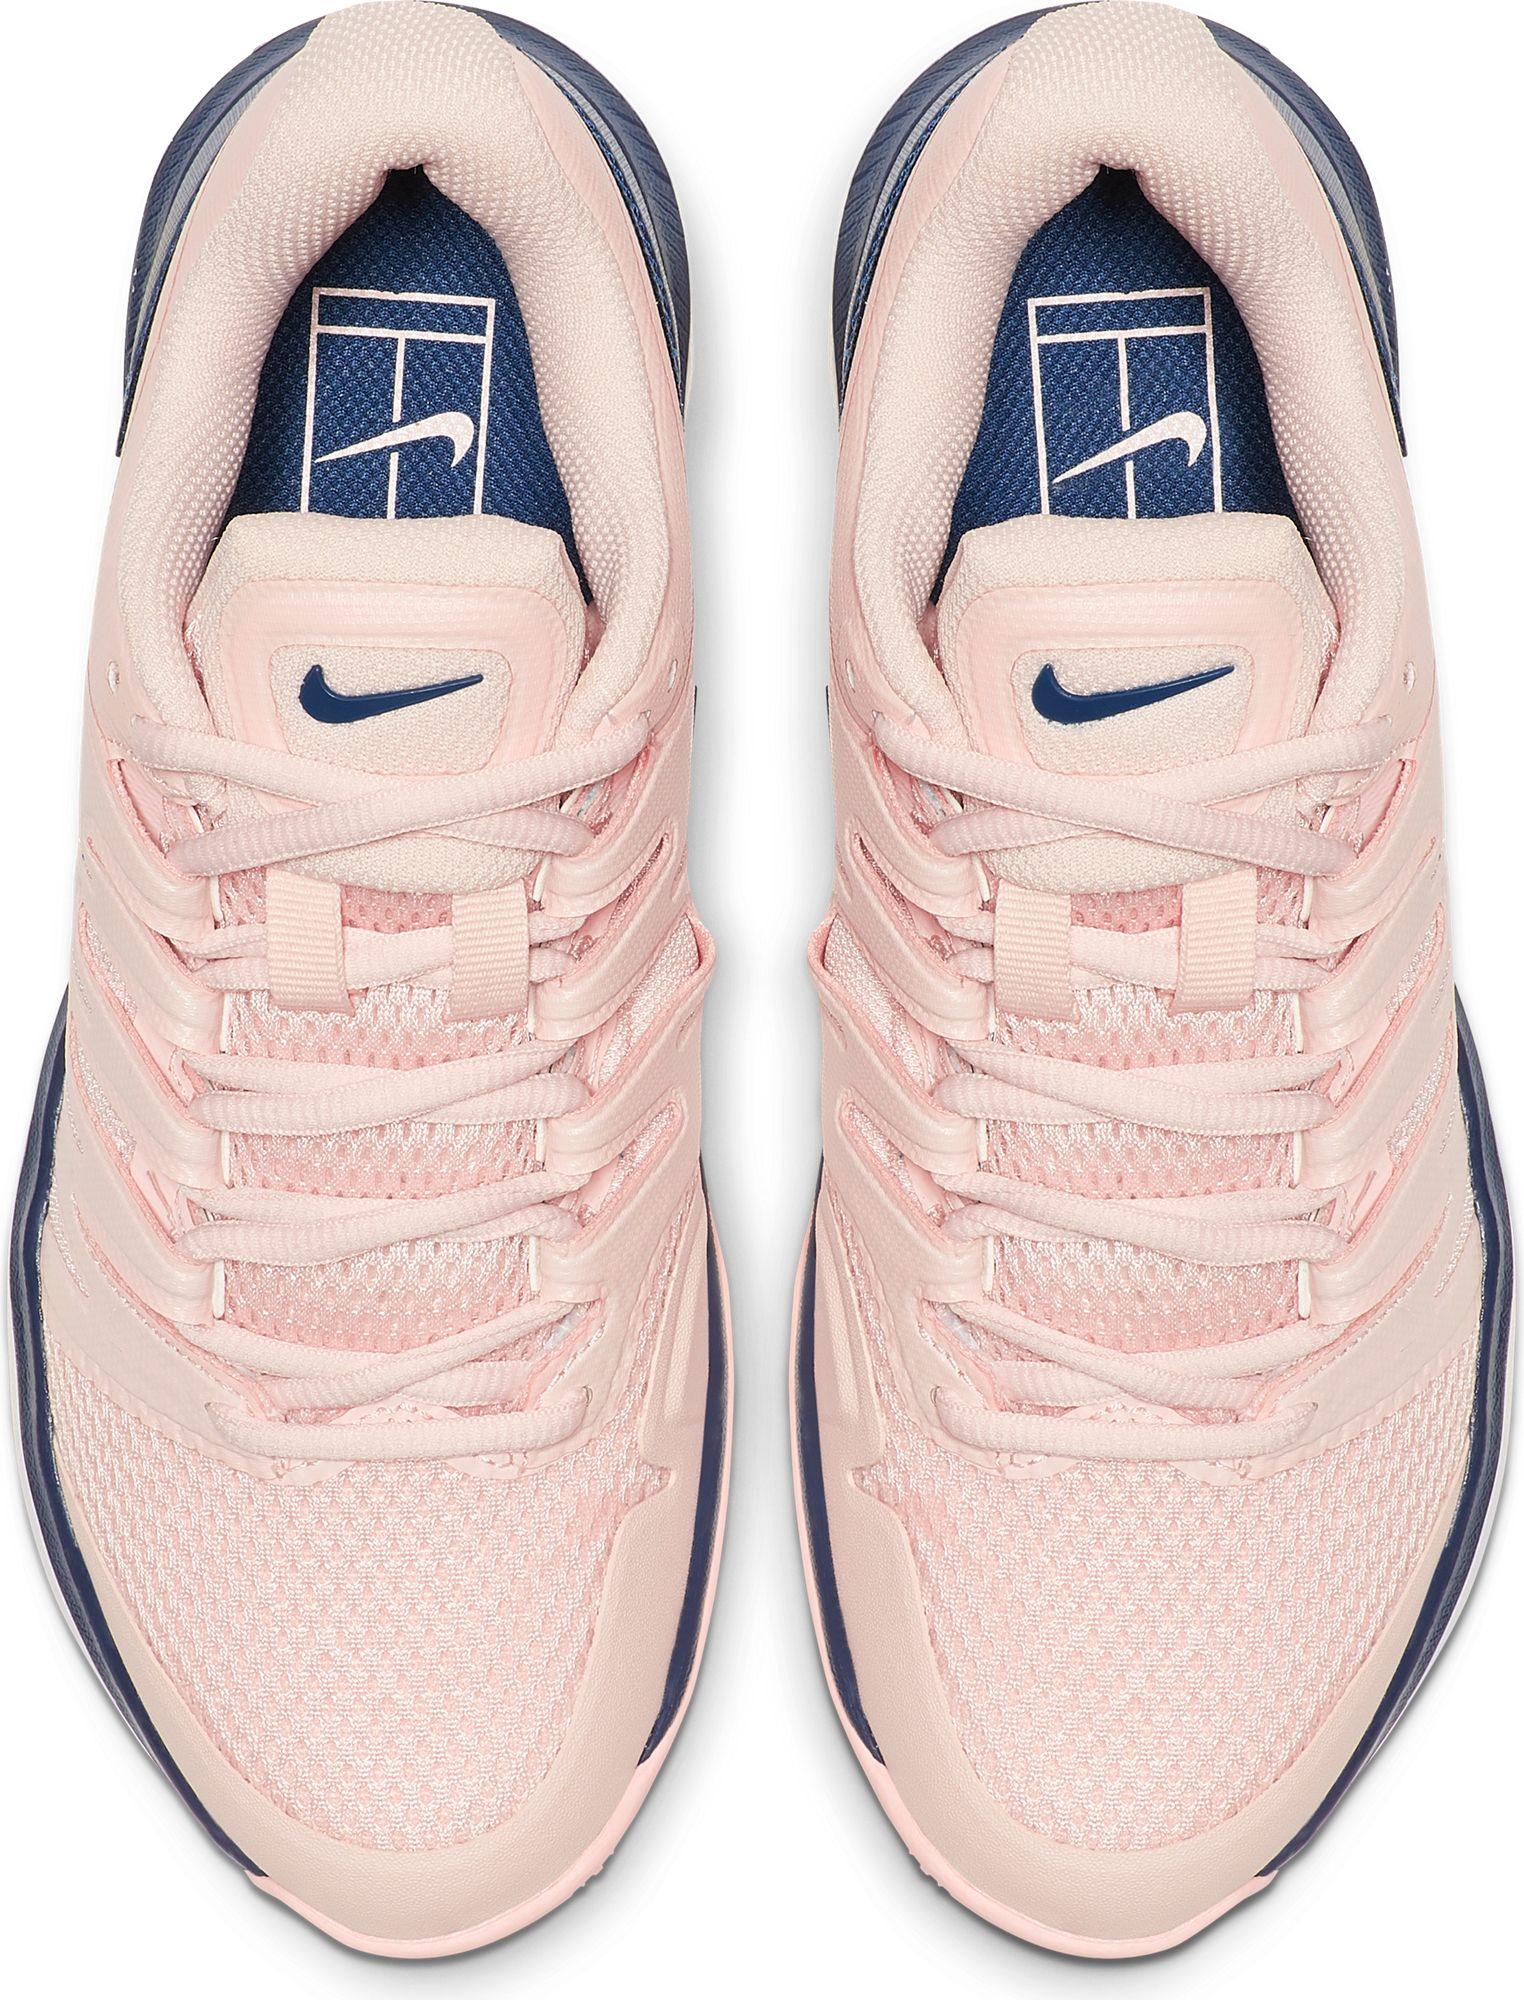 Nike Rubber Court Air Zoom Prestige Hard Court Tennis Shoe in Pink/Blue ...